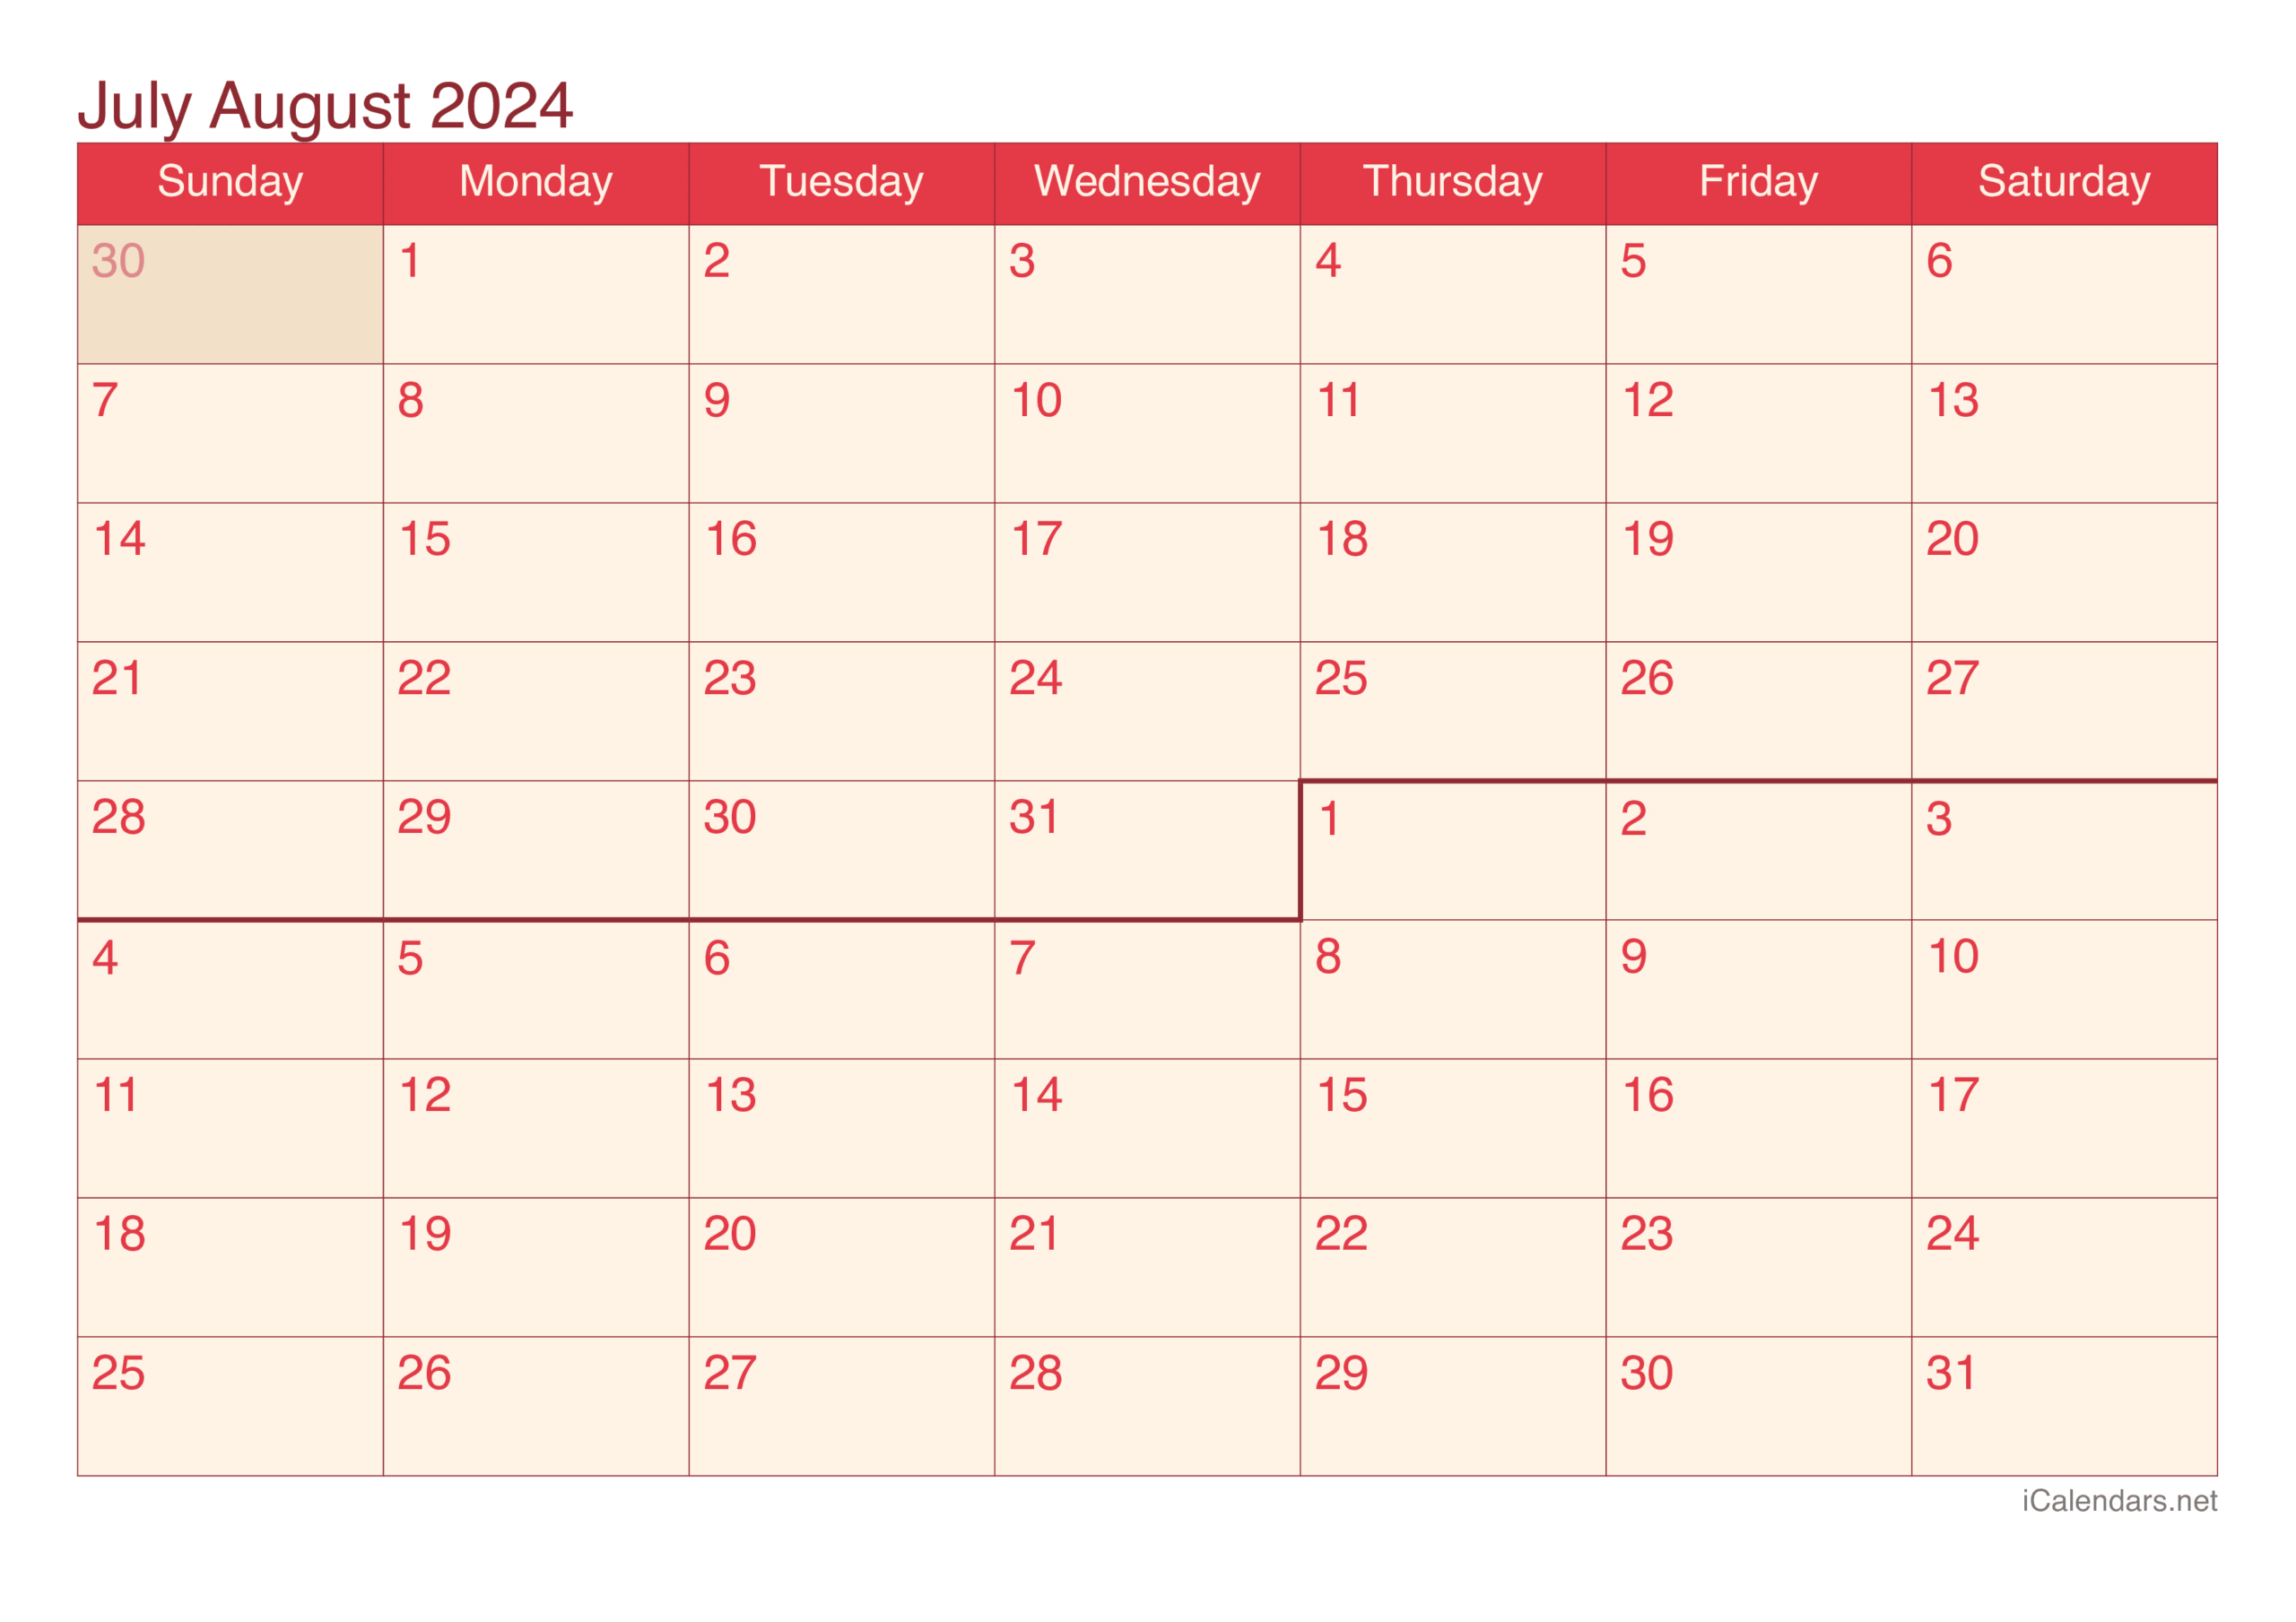 July And August 2024 Printable Calendar regarding Calendar of July and August 2024